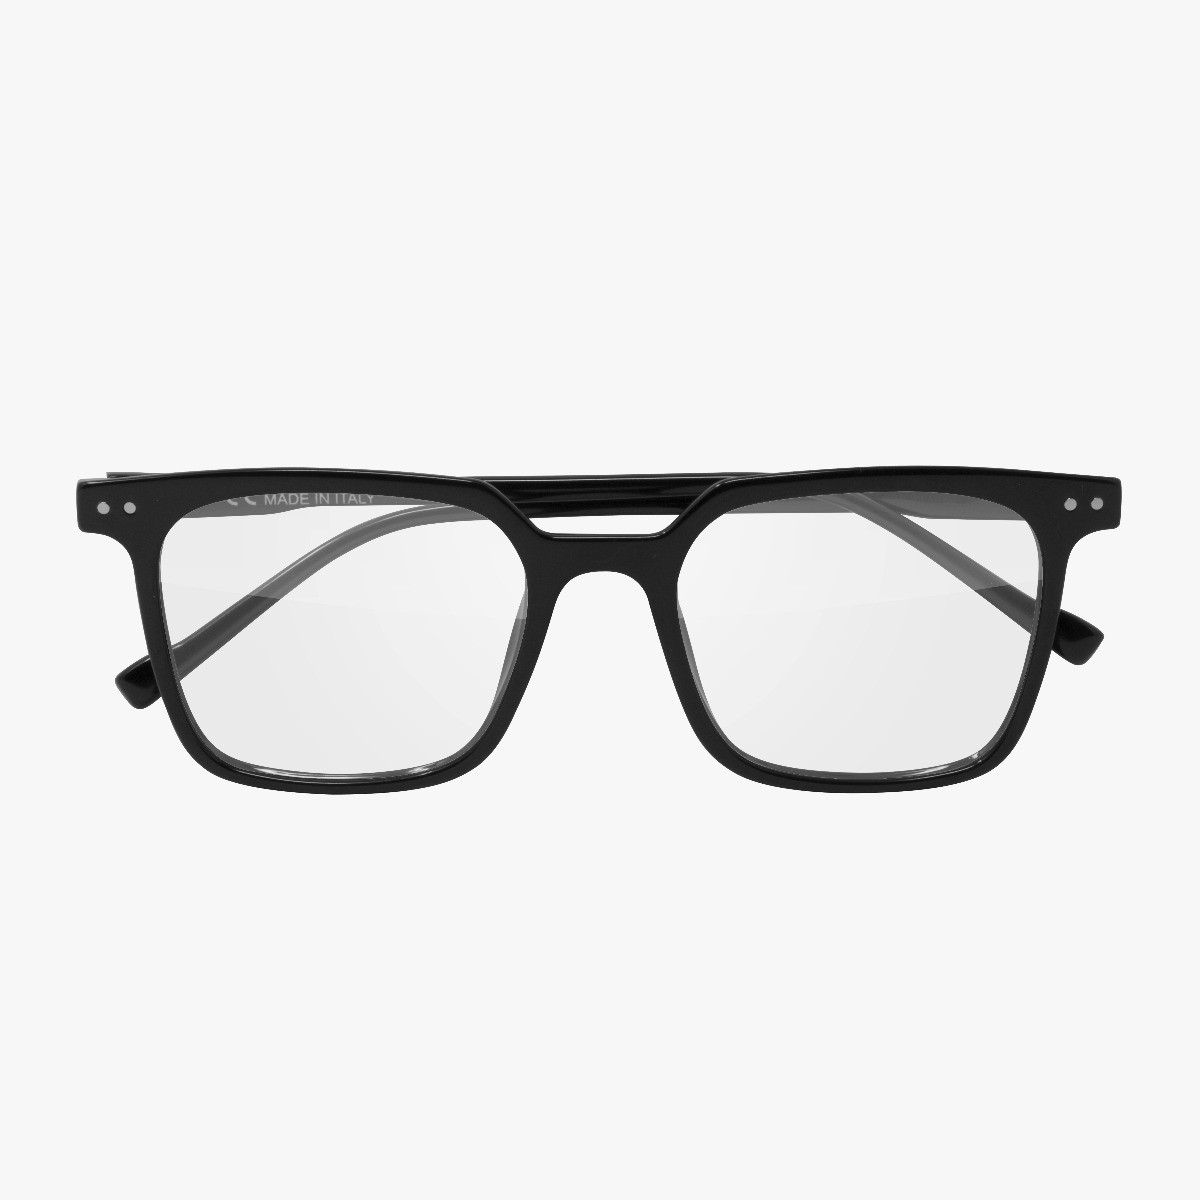 vertec eyewear rx frame black gloss ey21020206